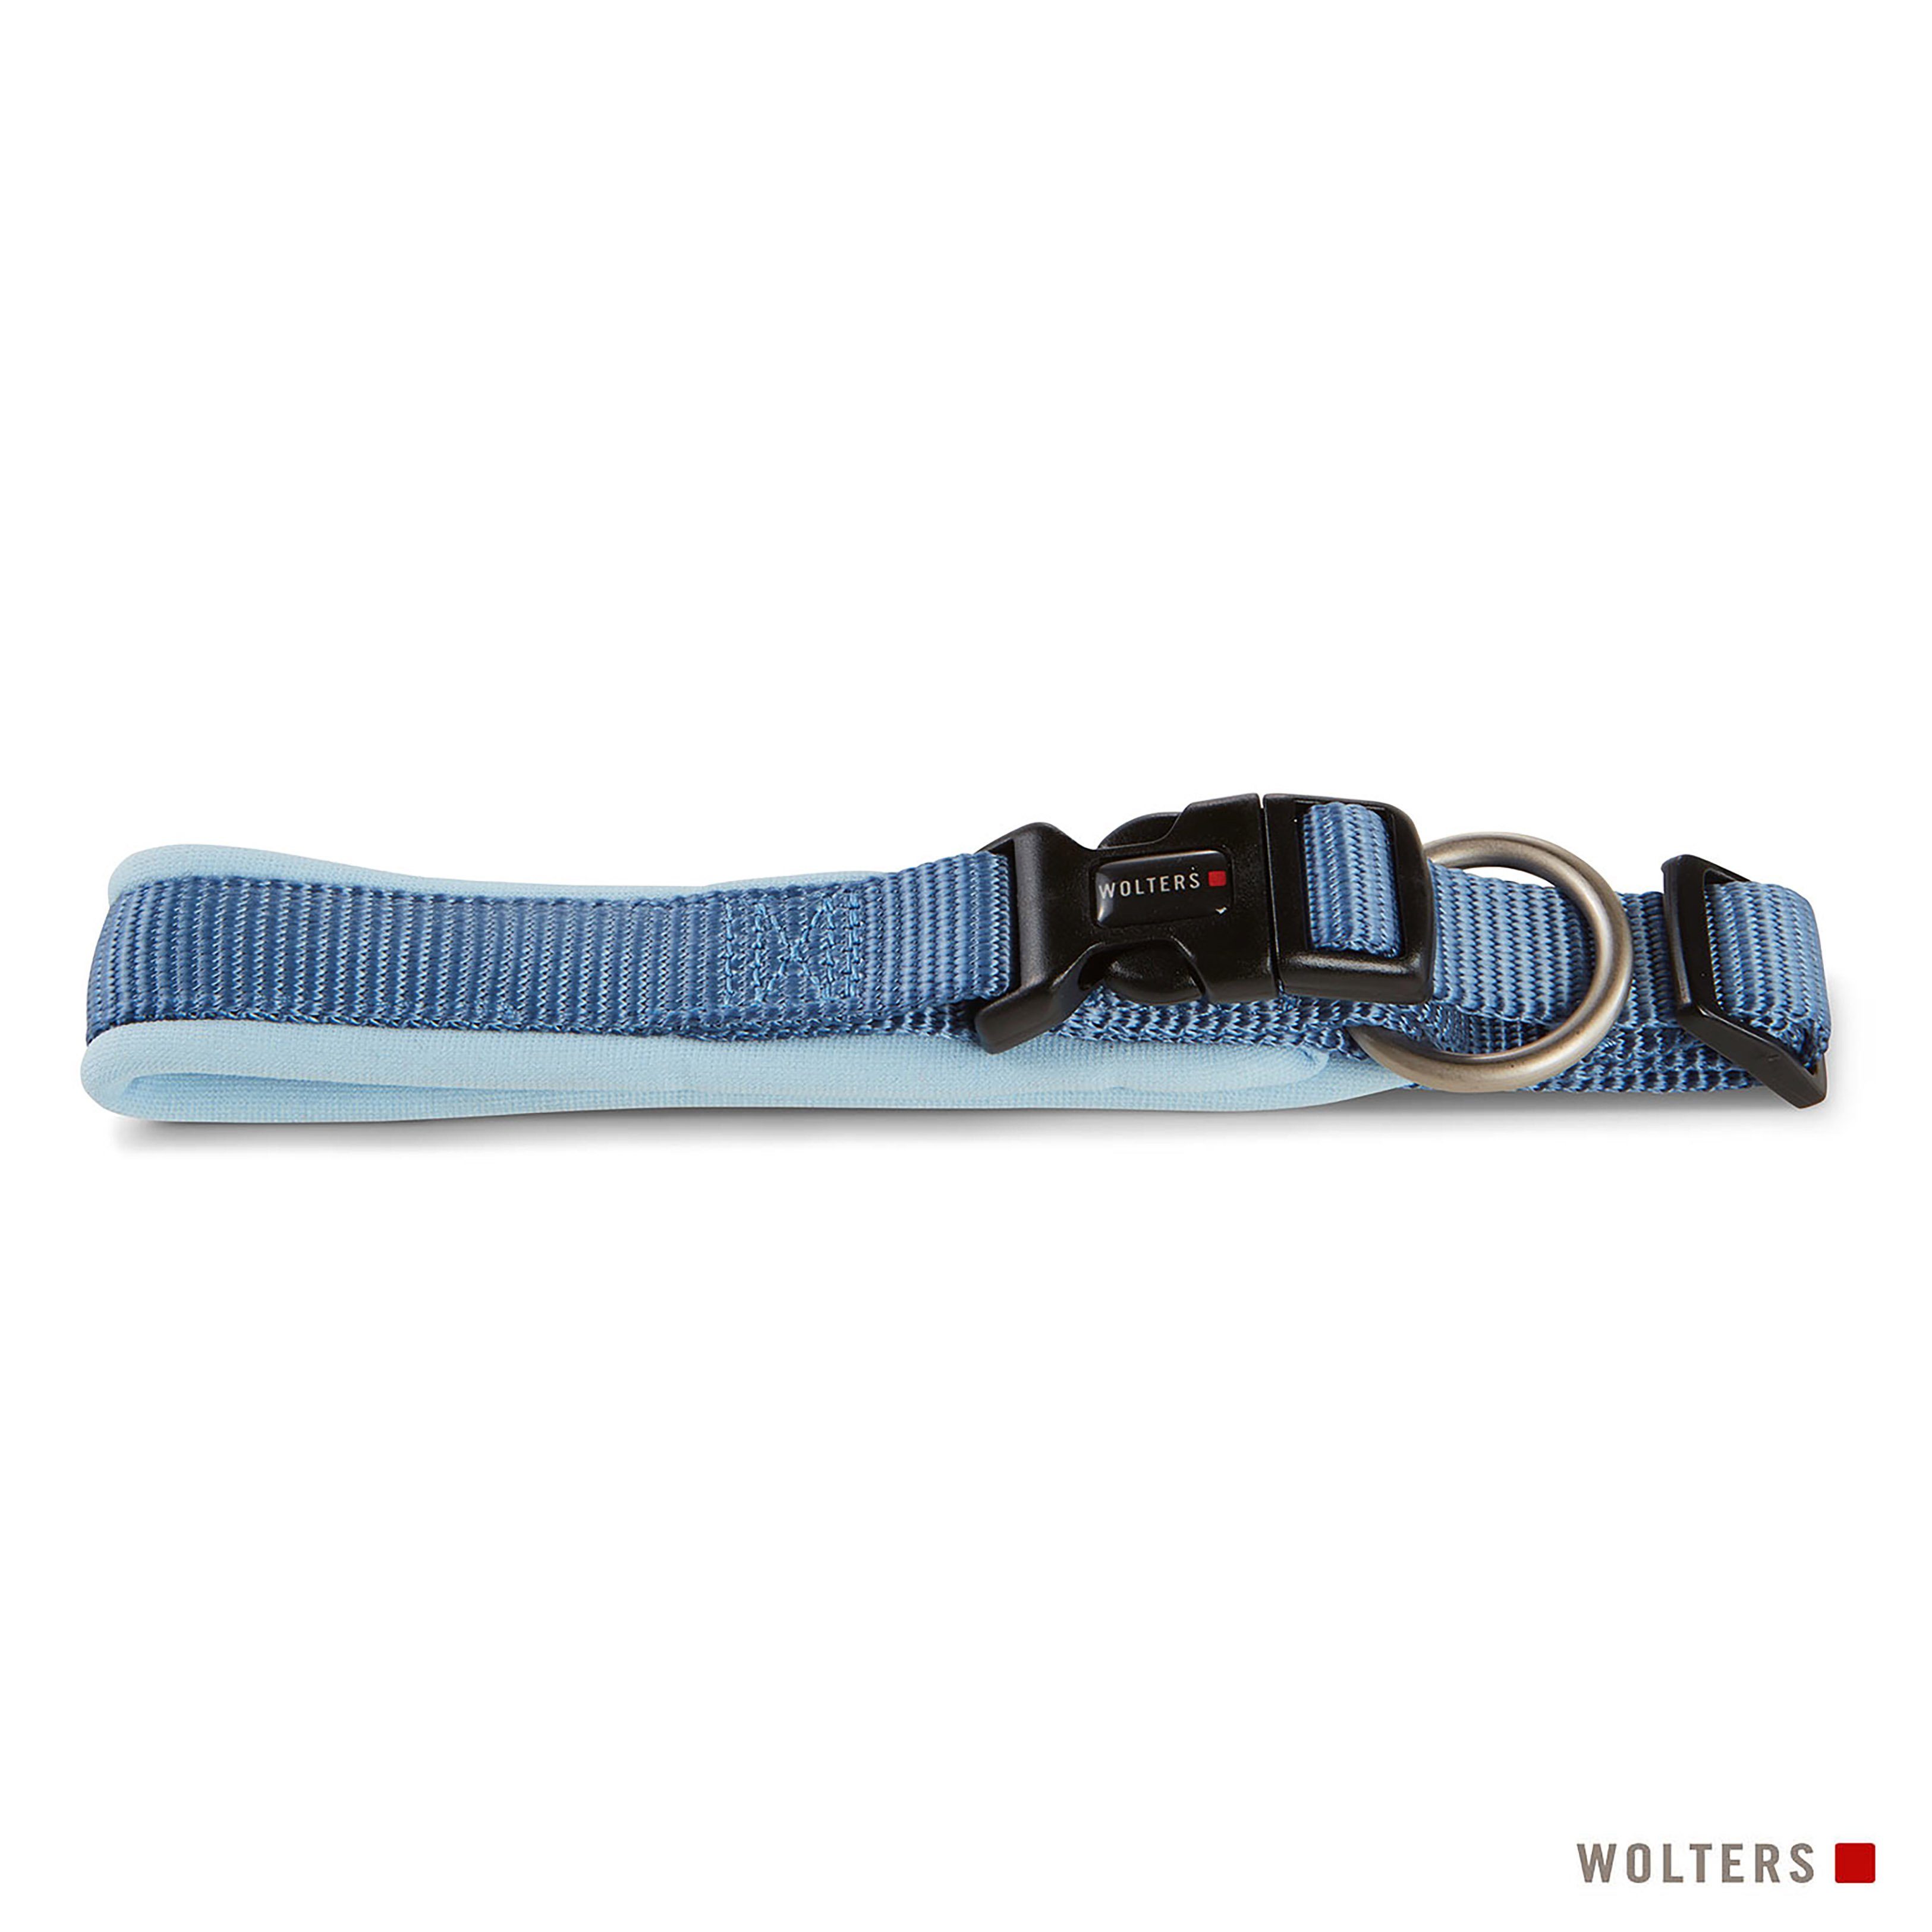 Wolters Hunde-Halsband Professional Comfort Halsband, Nylon, Neopren, in verschiedenen Größen, gepolstert